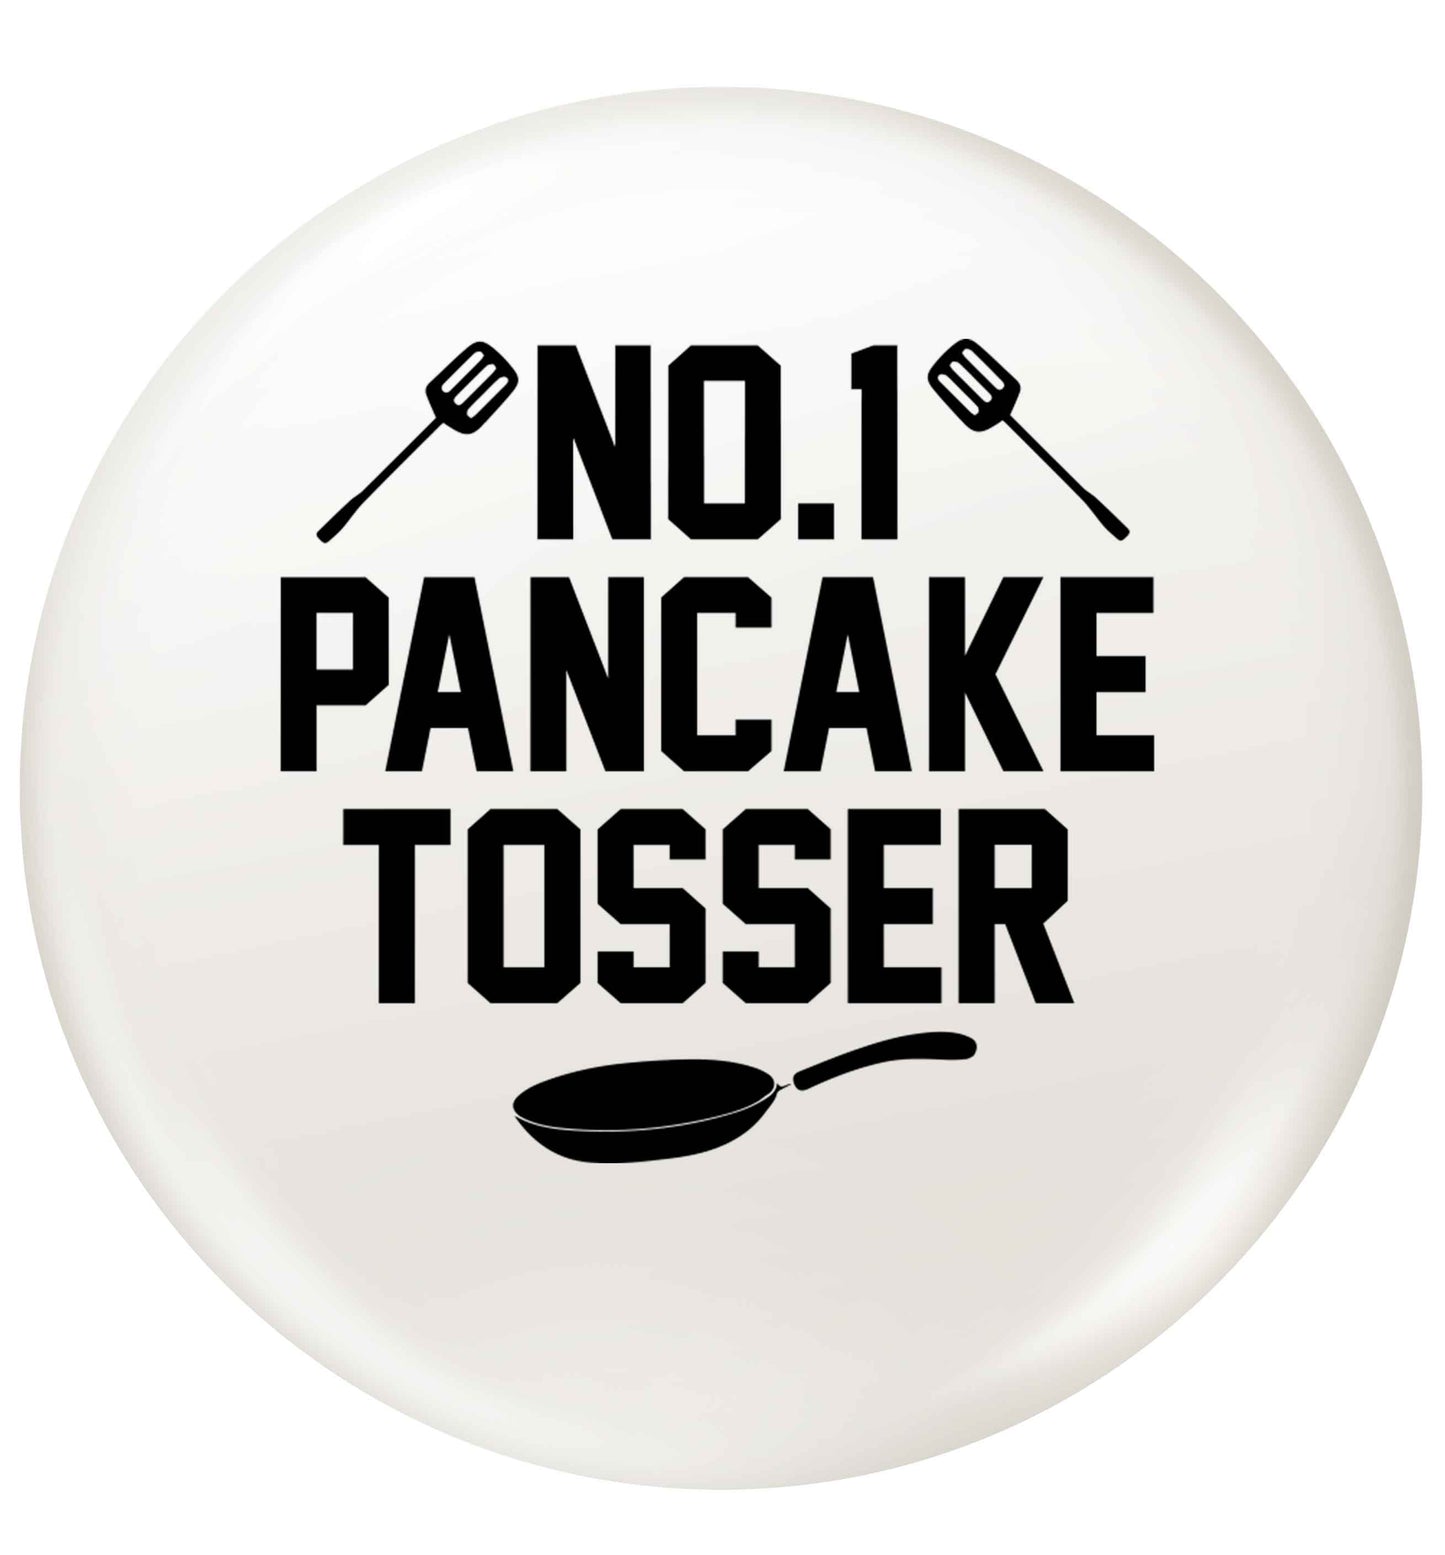 No.1 Pancake tosser small 25mm Pin badge